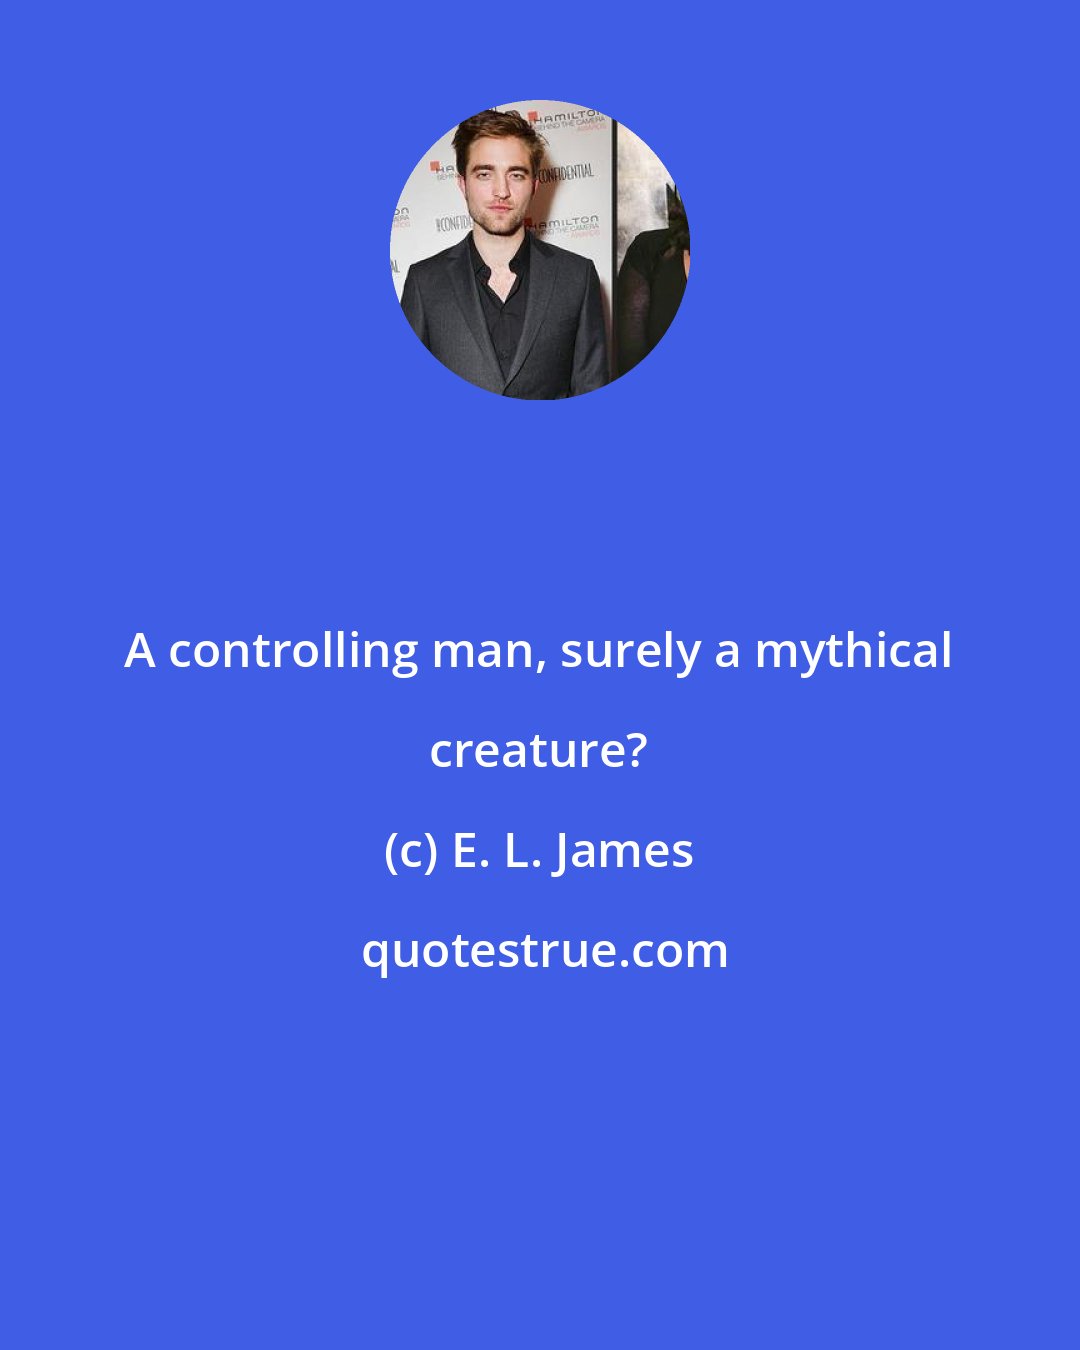 E. L. James: A controlling man, surely a mythical creature?